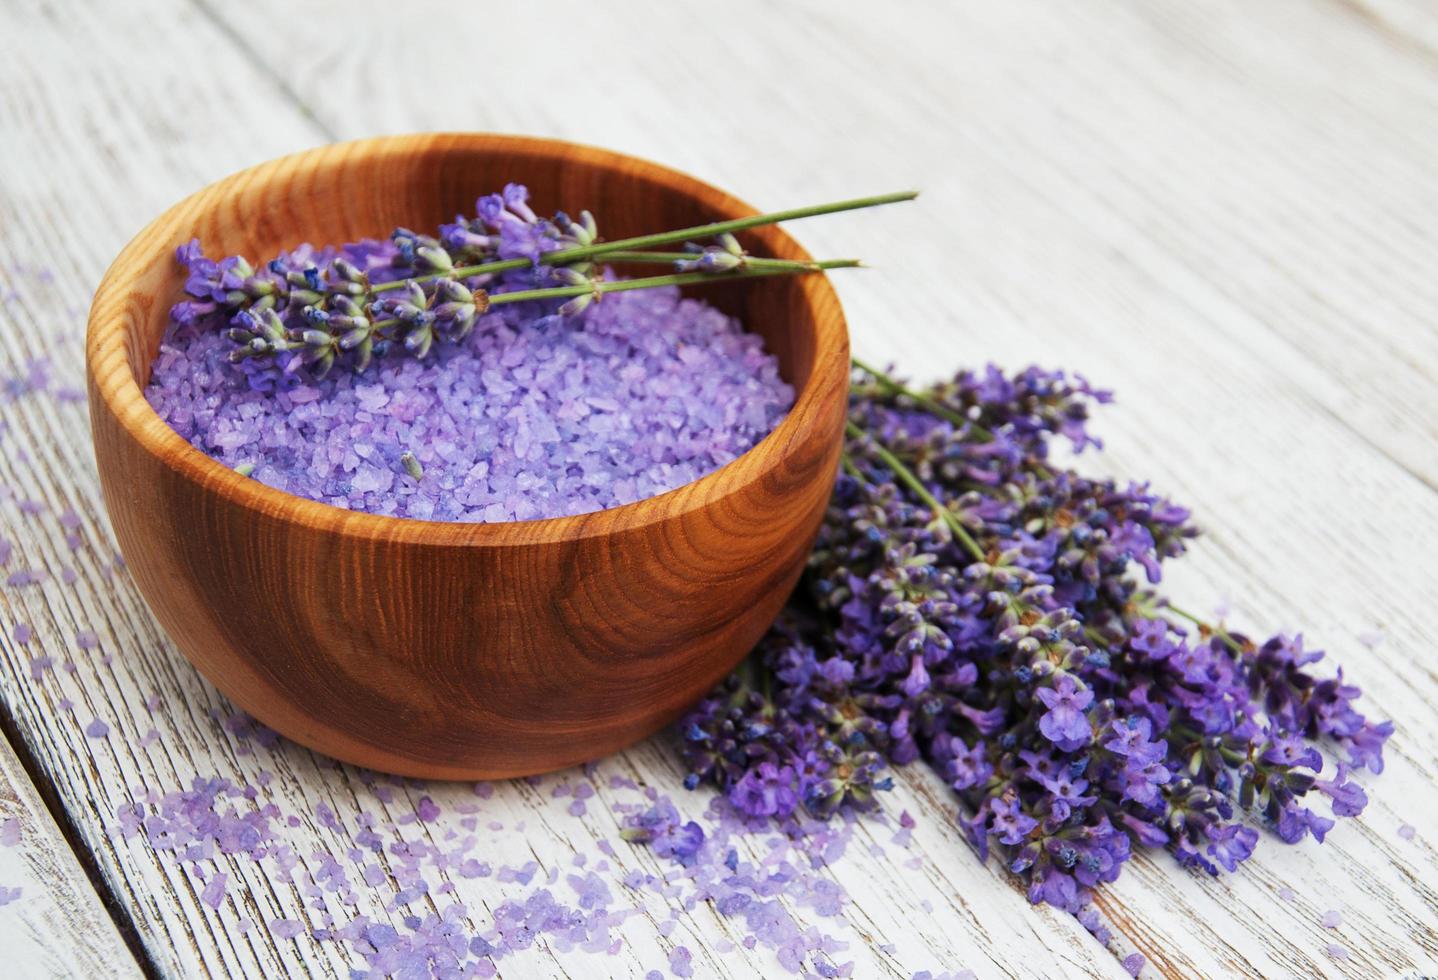 Lavender and massage salt photo